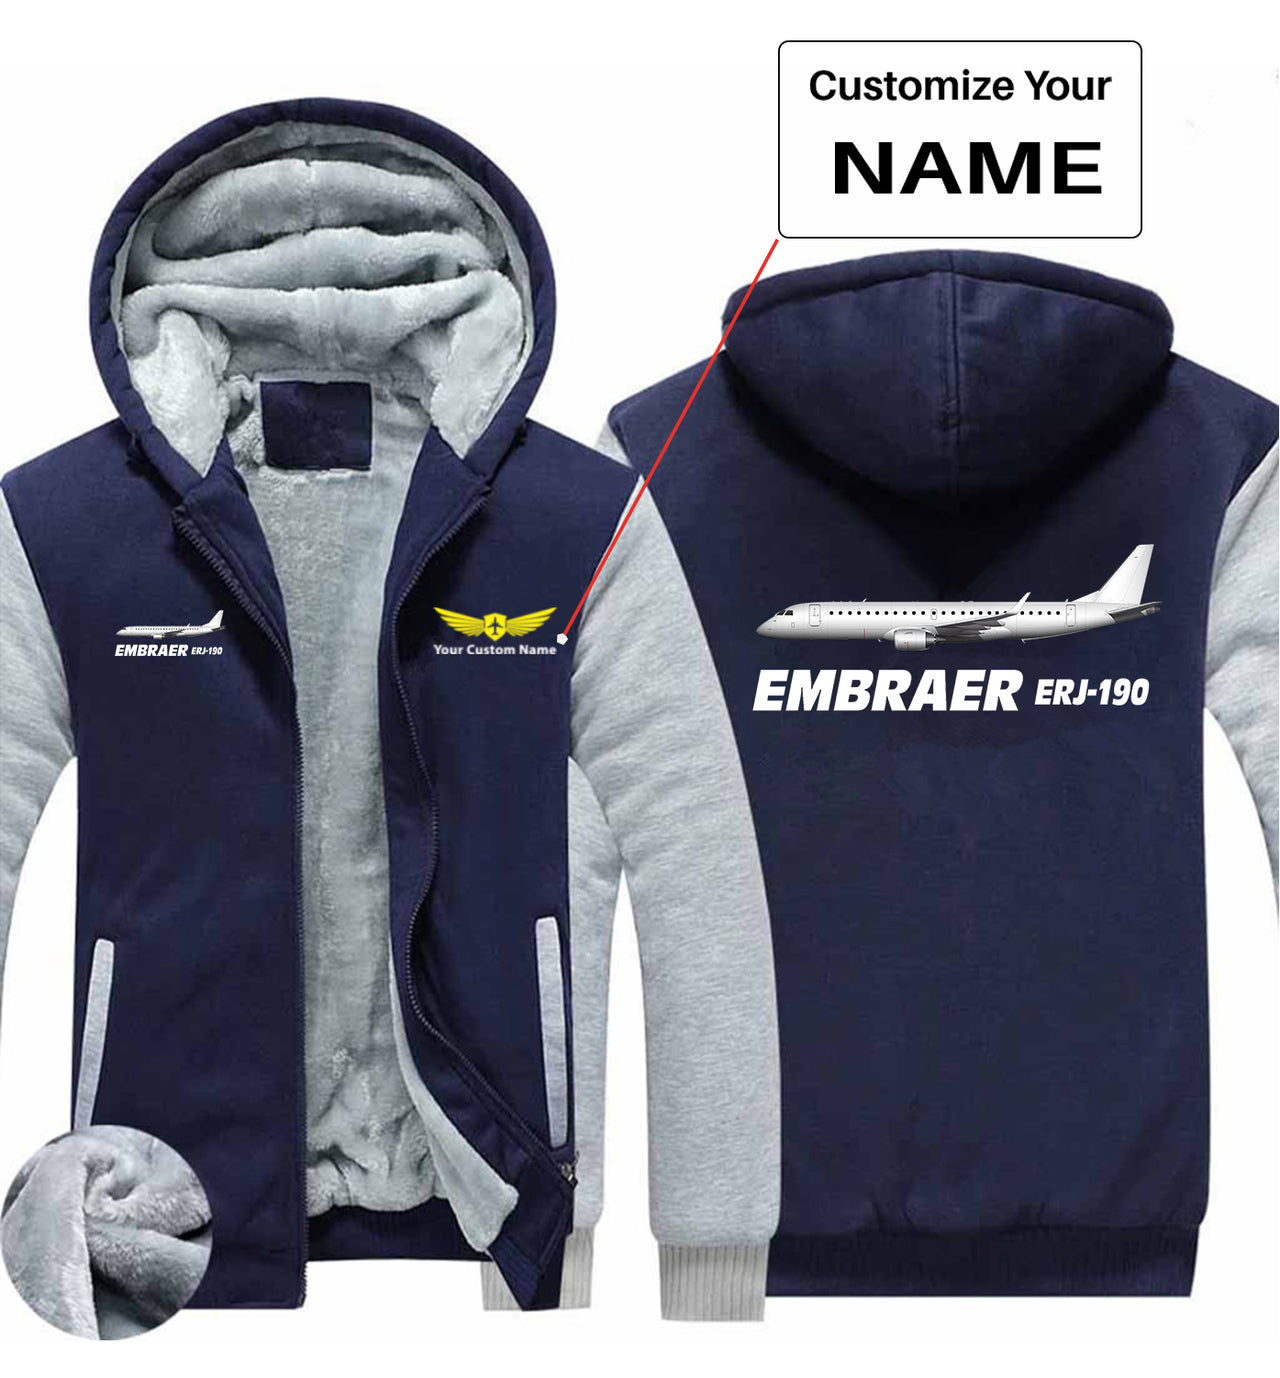 The Embraer ERJ-190 Designed Zipped Sweatshirts